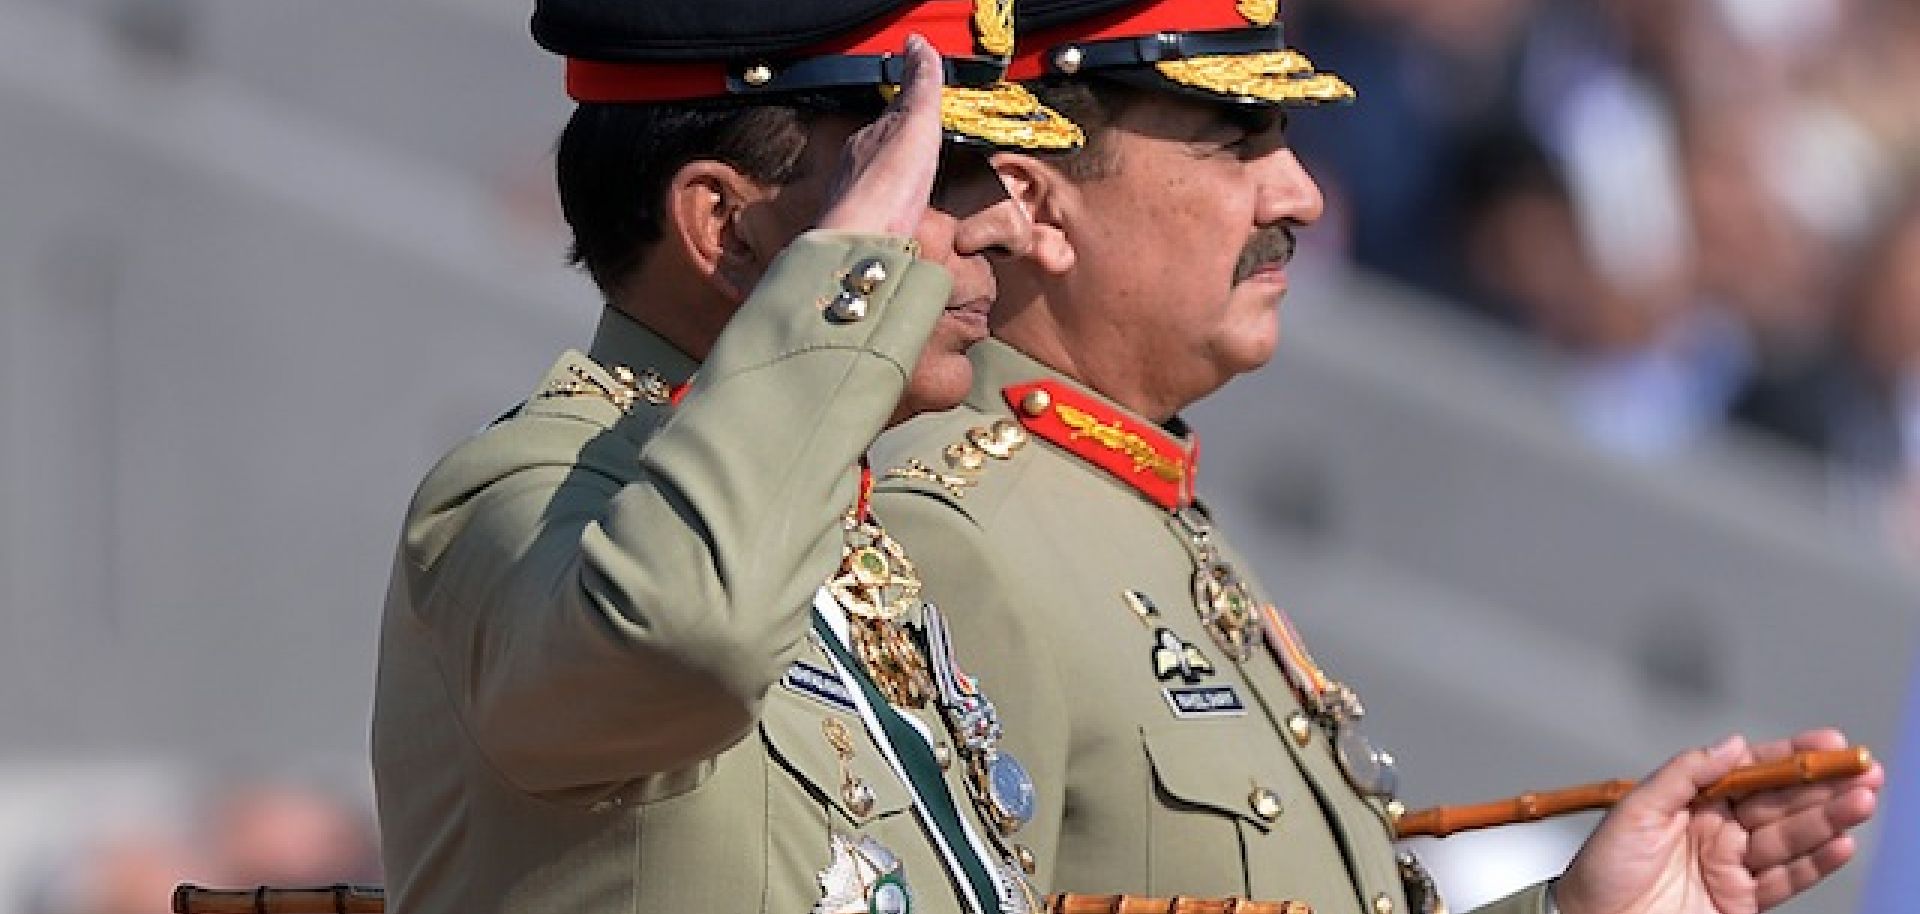 Pakistan's Civil-Military Balance Under a New Army Chief